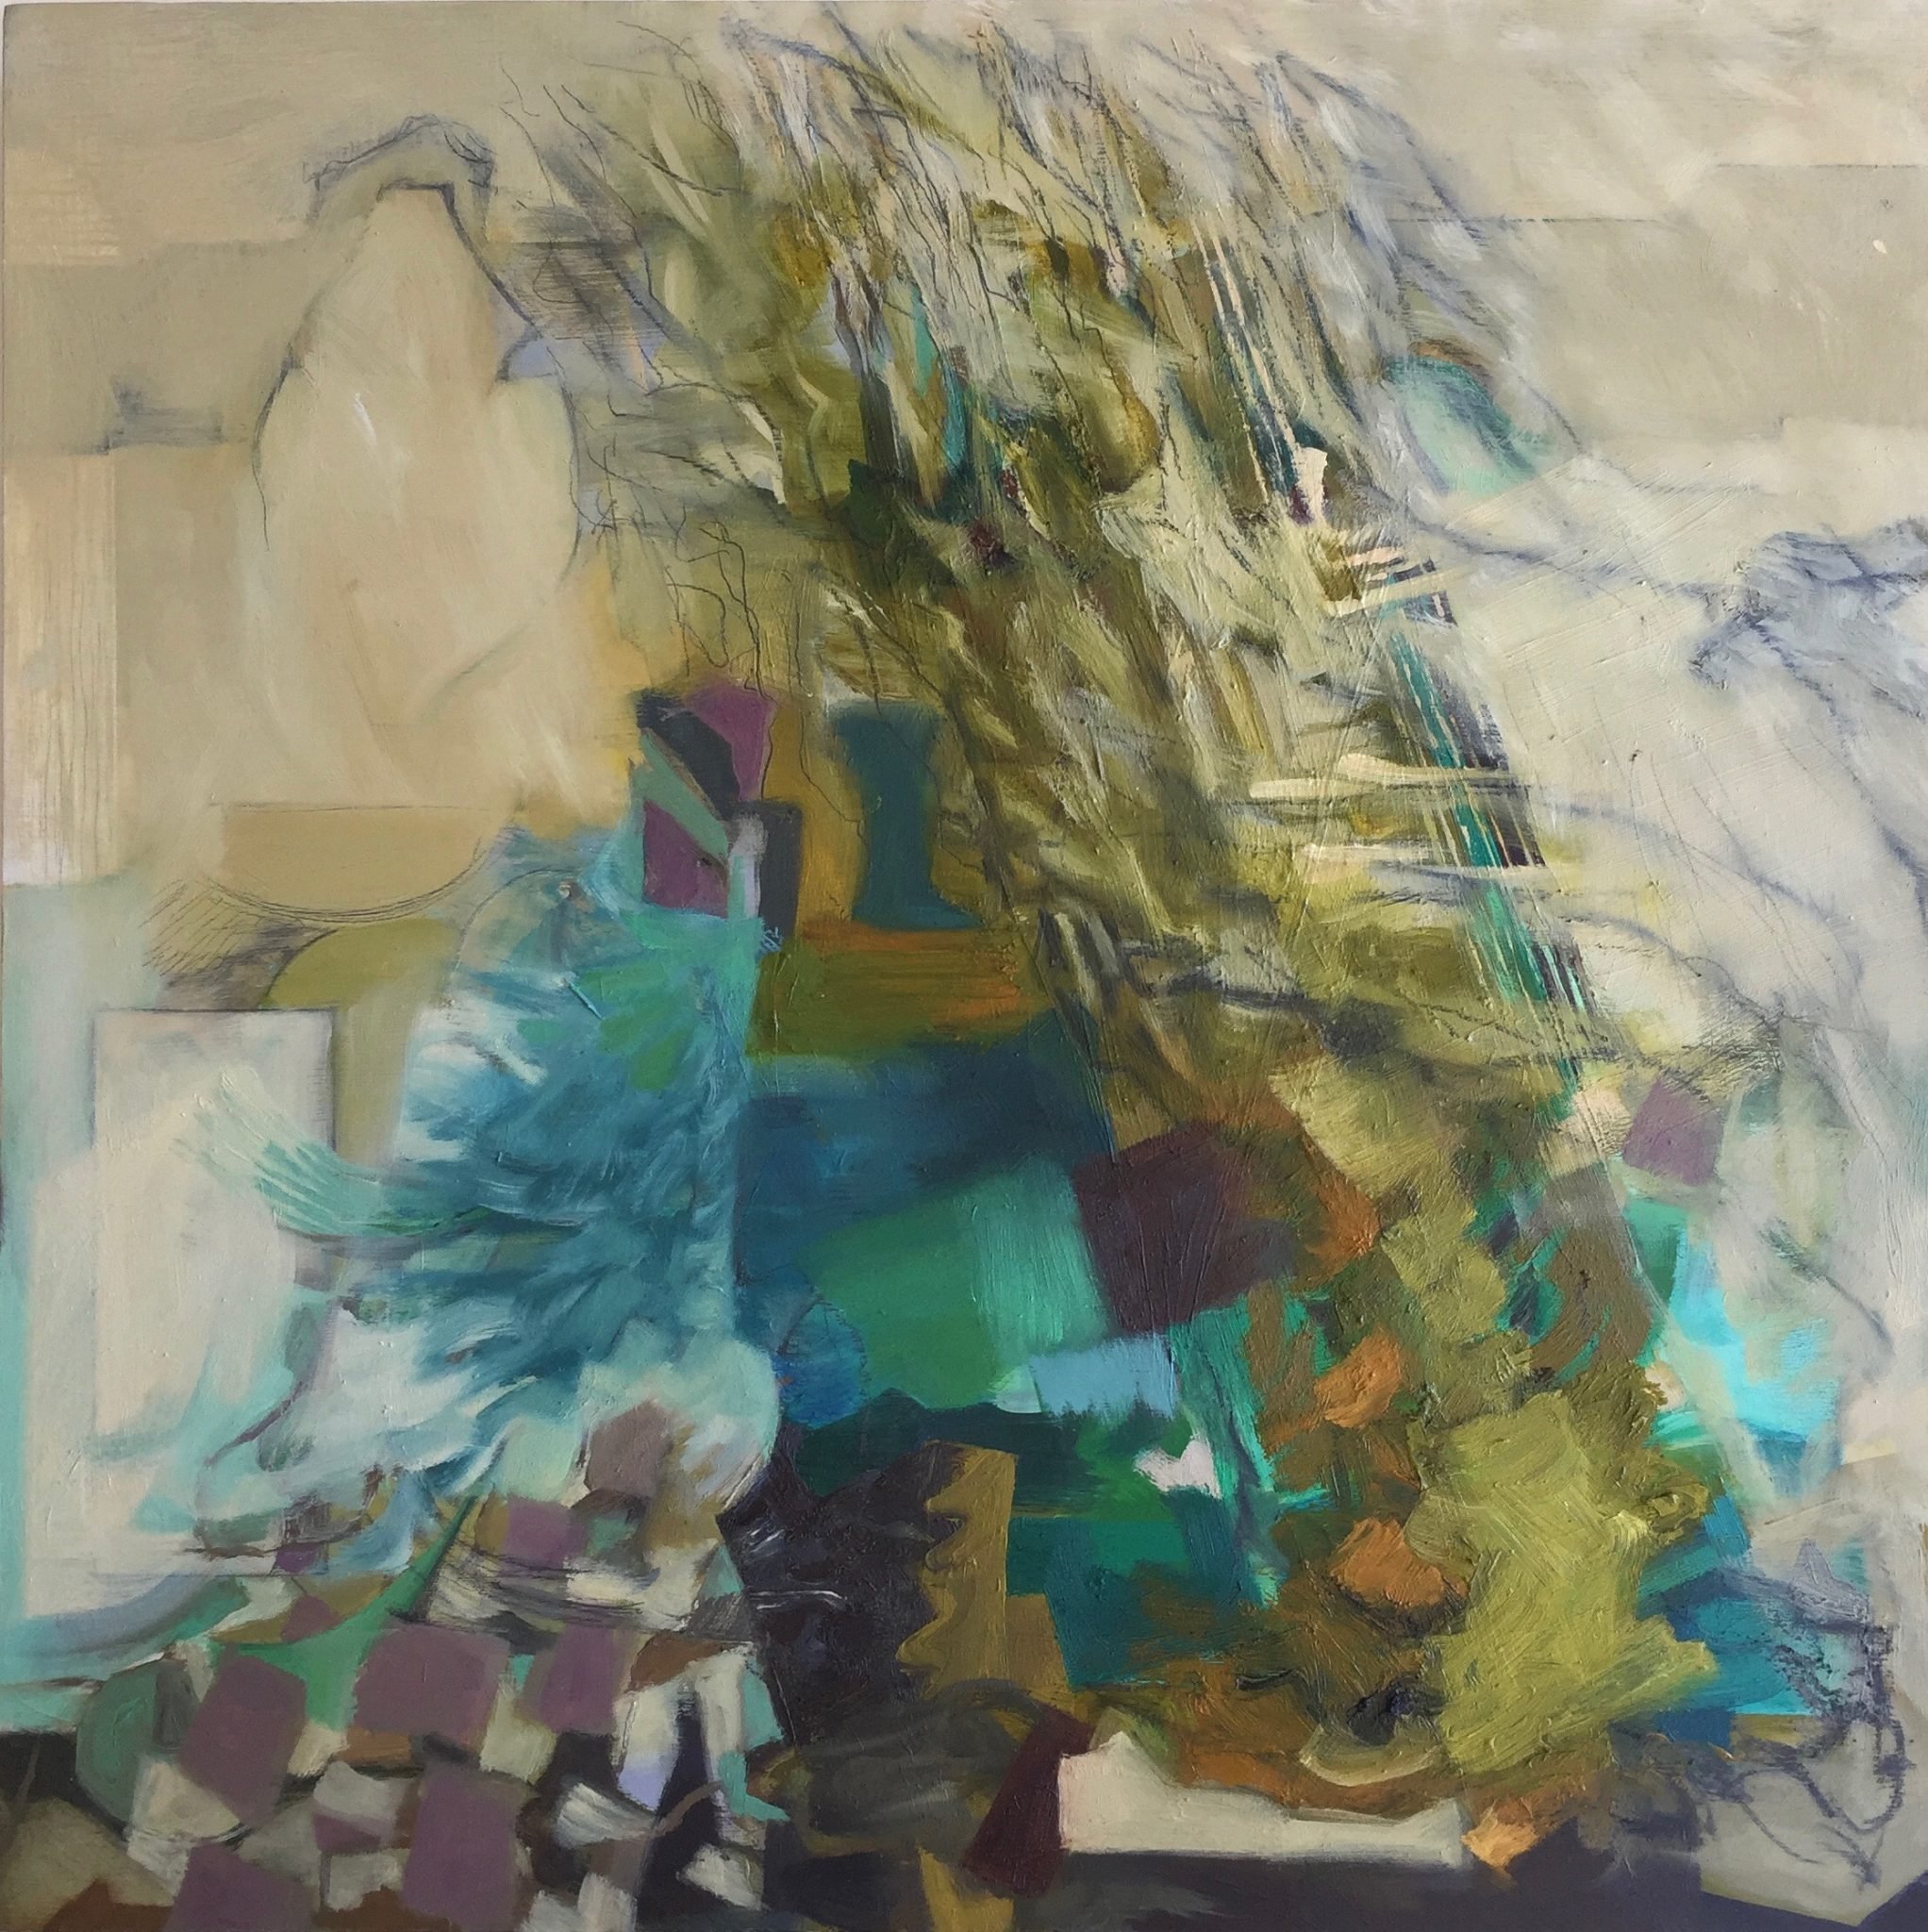 Liz Penniman, "Seaweed and Chalk"; Oil paint and graphite on wood panel; 16" x 16"